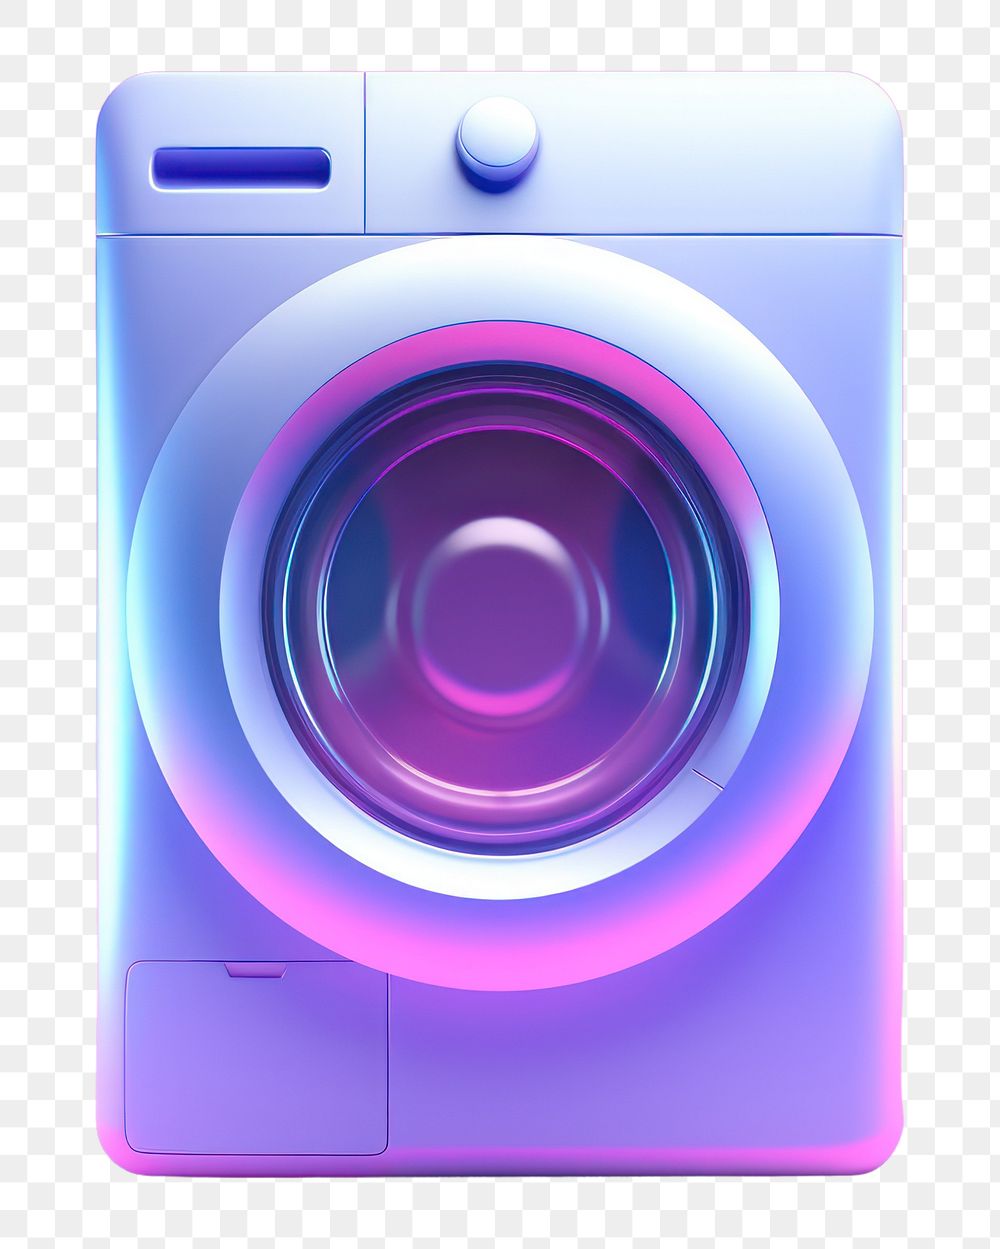 Appliance technology multimedia laundromat. AI generated Image by rawpixel.